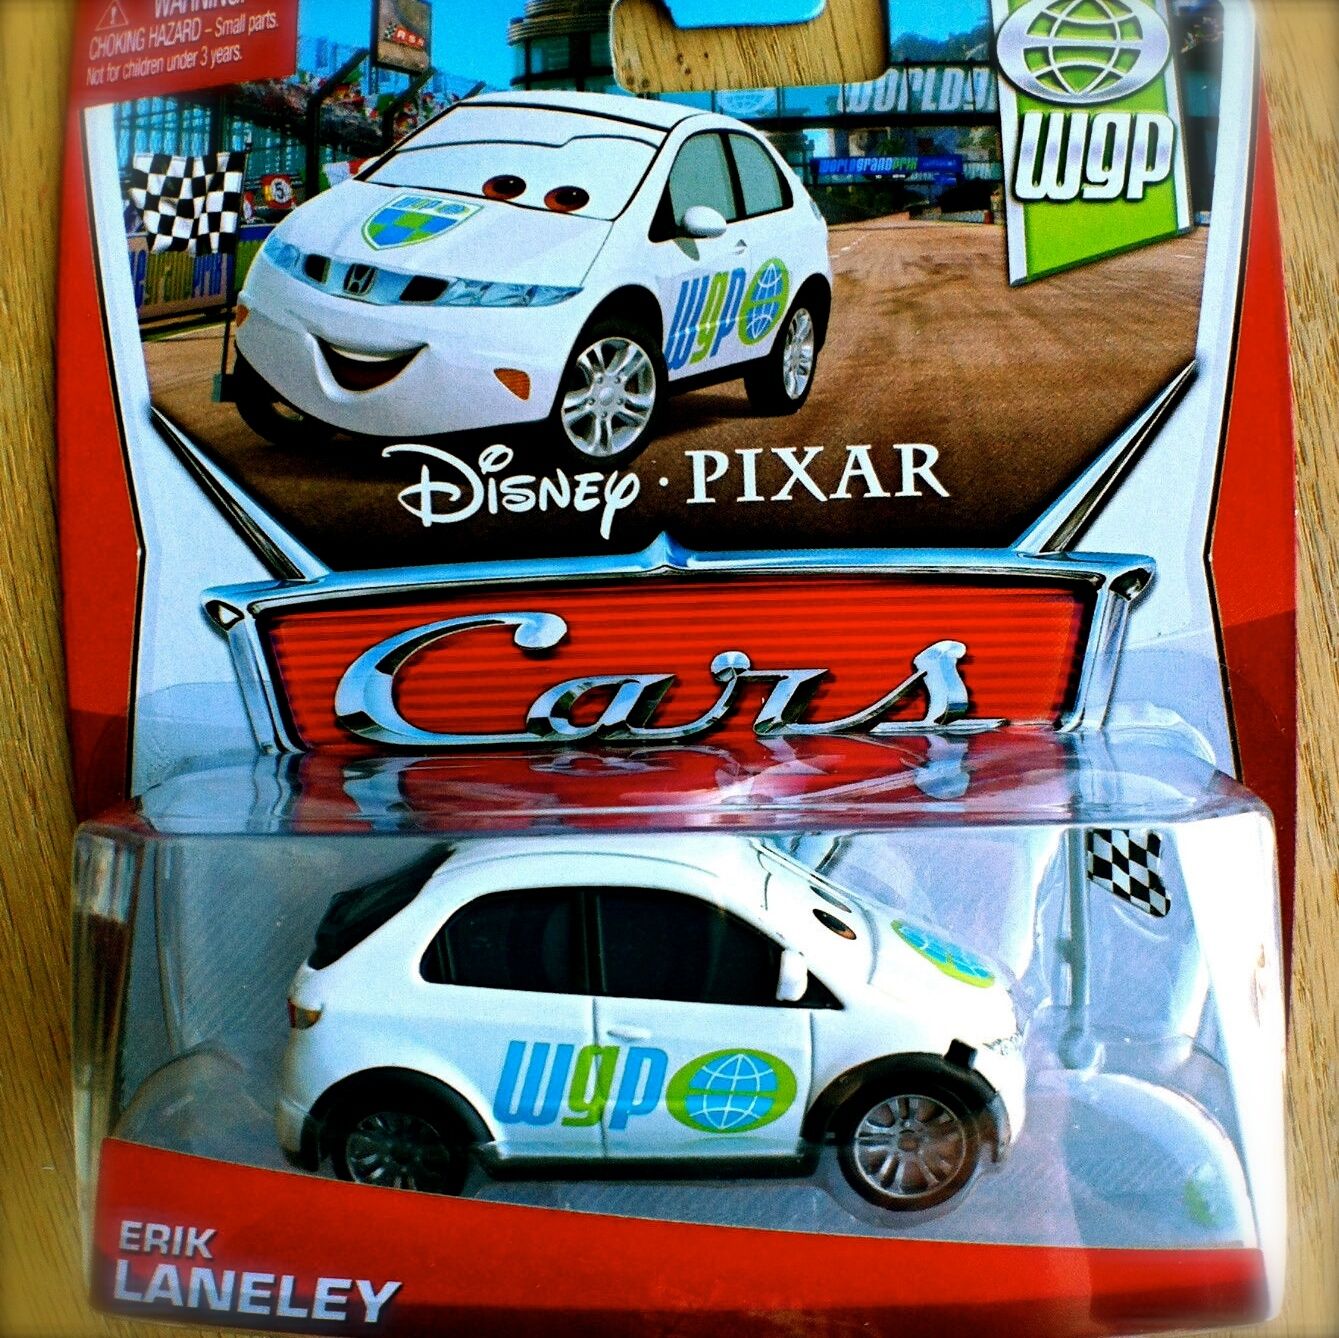 Disney PIXAR Cars ERIK LANELEY on 2013 WGP THEME CARD diecast 9/17 Honda flag